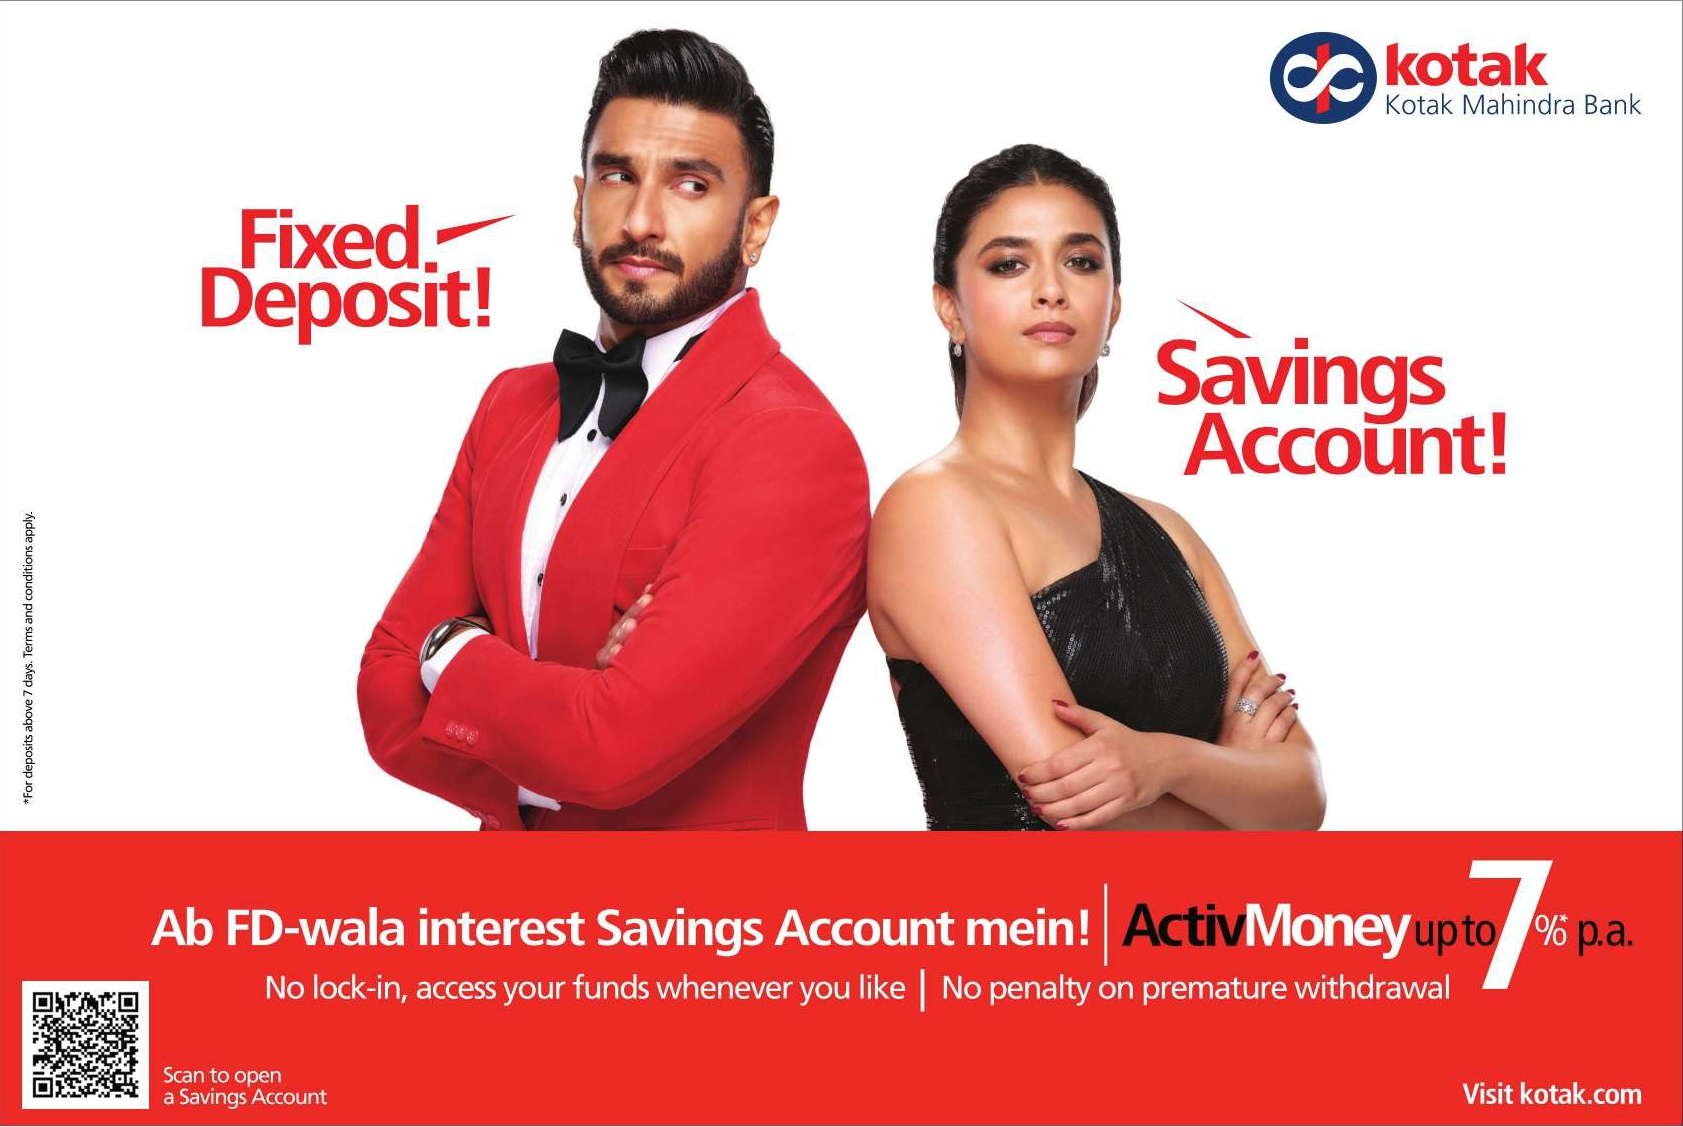 FD-wala interest saving account